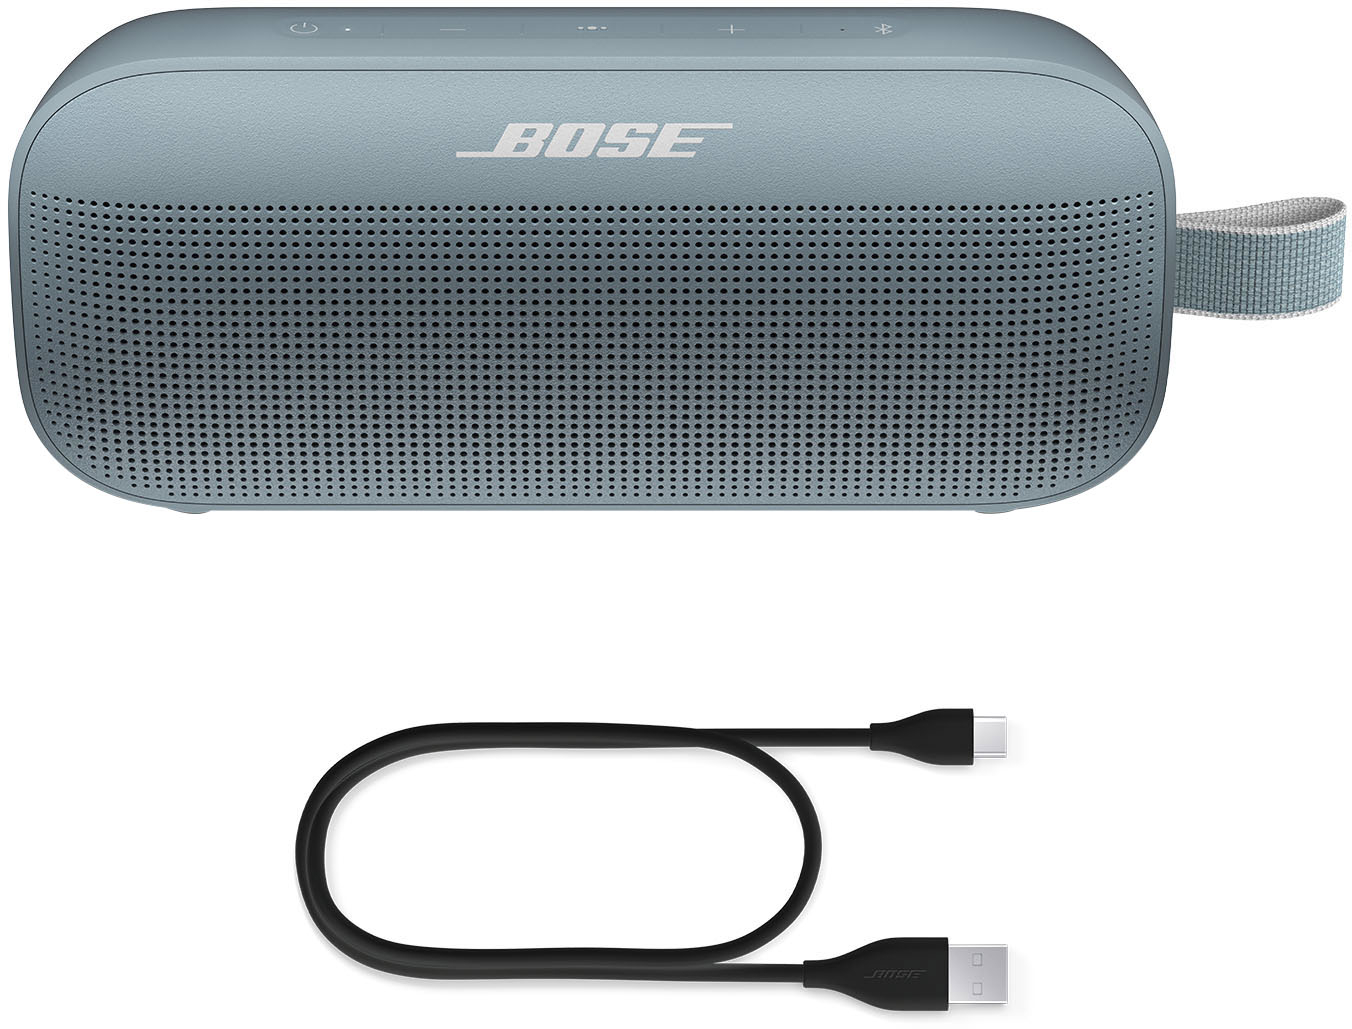 Buy Portable Bluetooth with Stone Speaker Waterproof/Dustproof Best 865983-0200 Blue Flex - Design SoundLink Bose